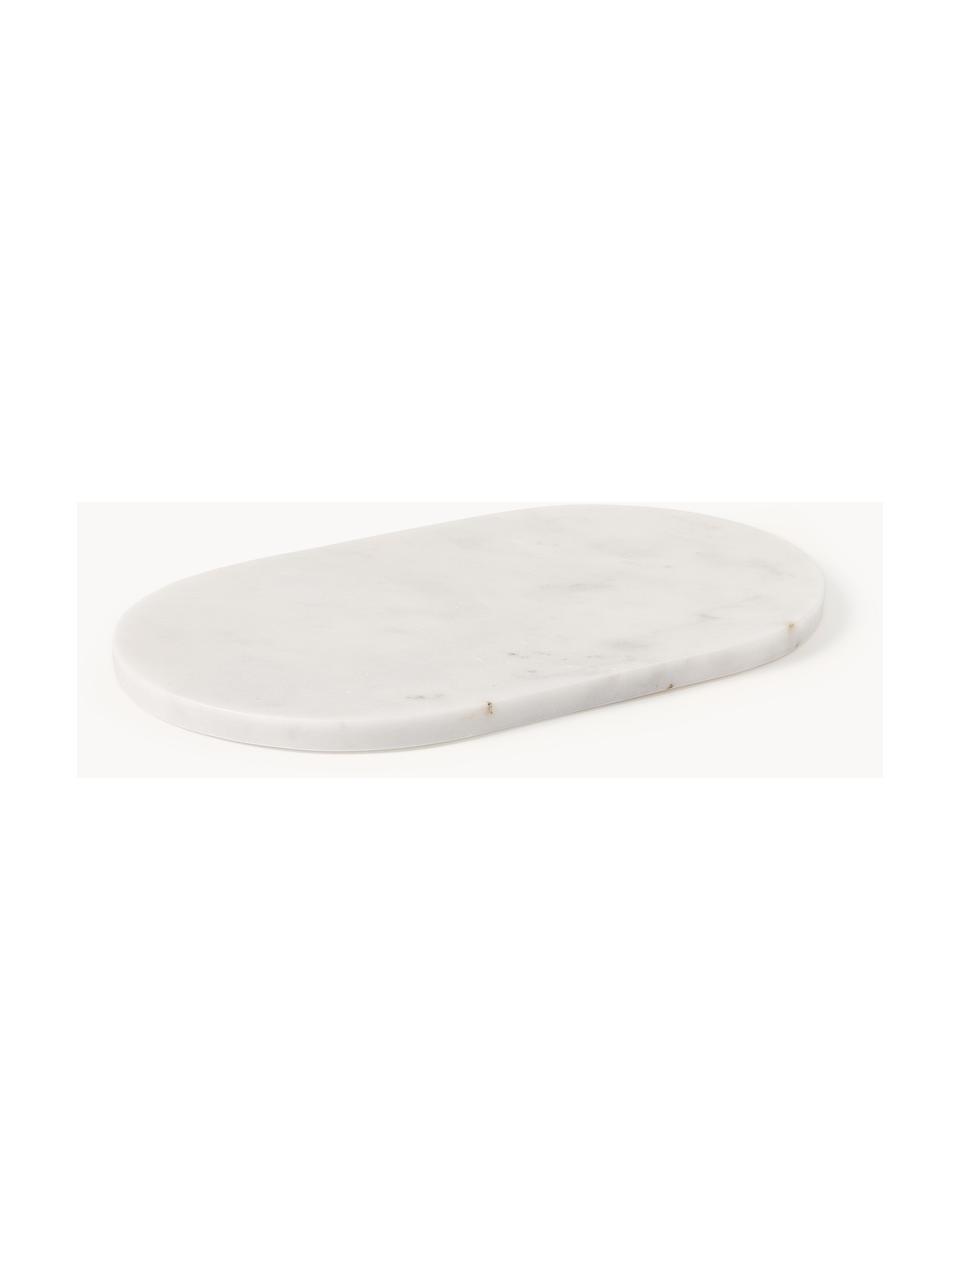 Ručně vyrobený mramorový servírovací talíř Aika, Mramor, Bílá, mramorovaná, Š 36 cm, H 22 cm